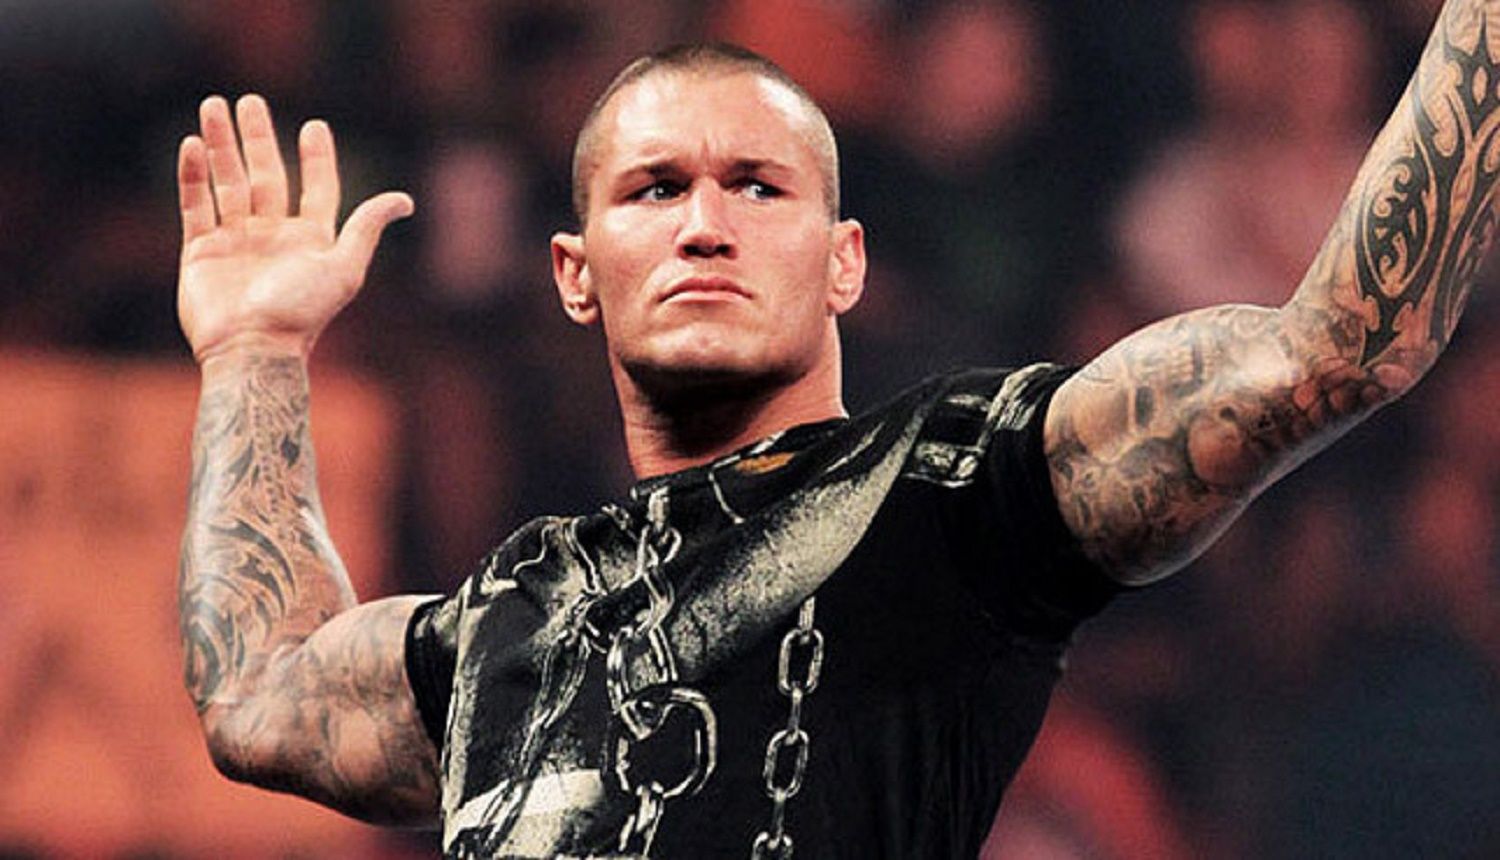 Randy Orton Pose Image